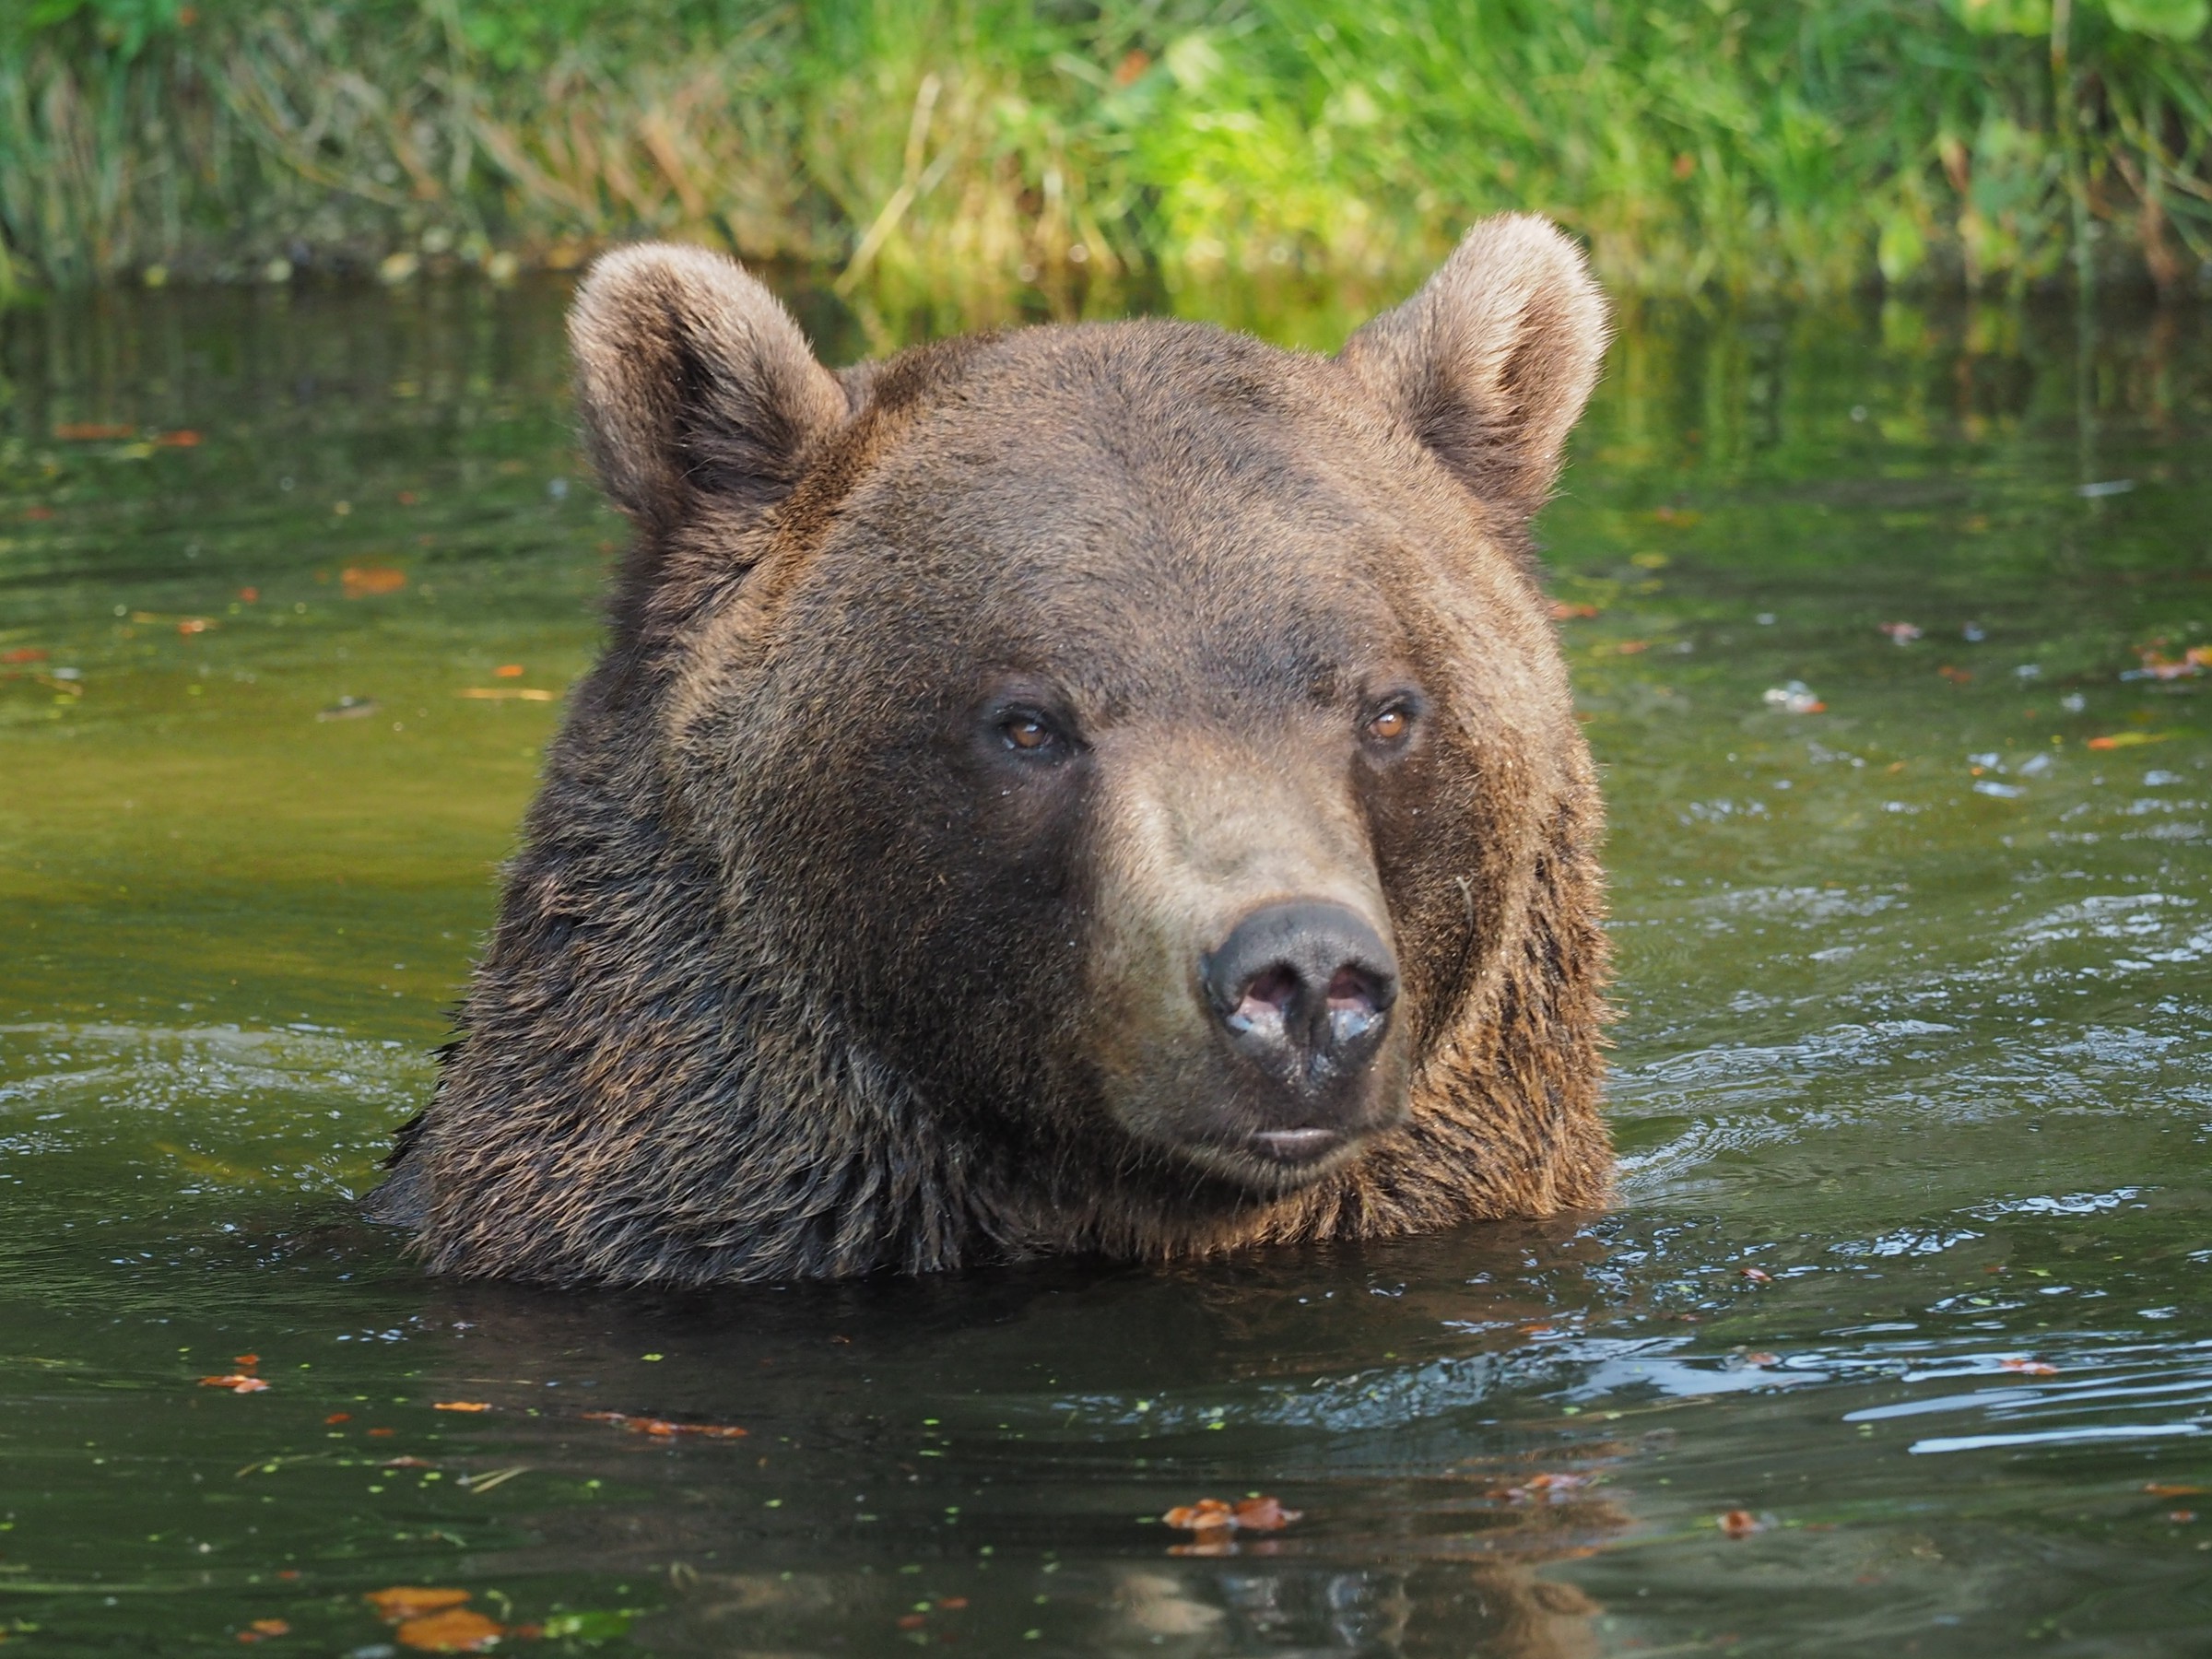 Bear Erich is taking a cool bath